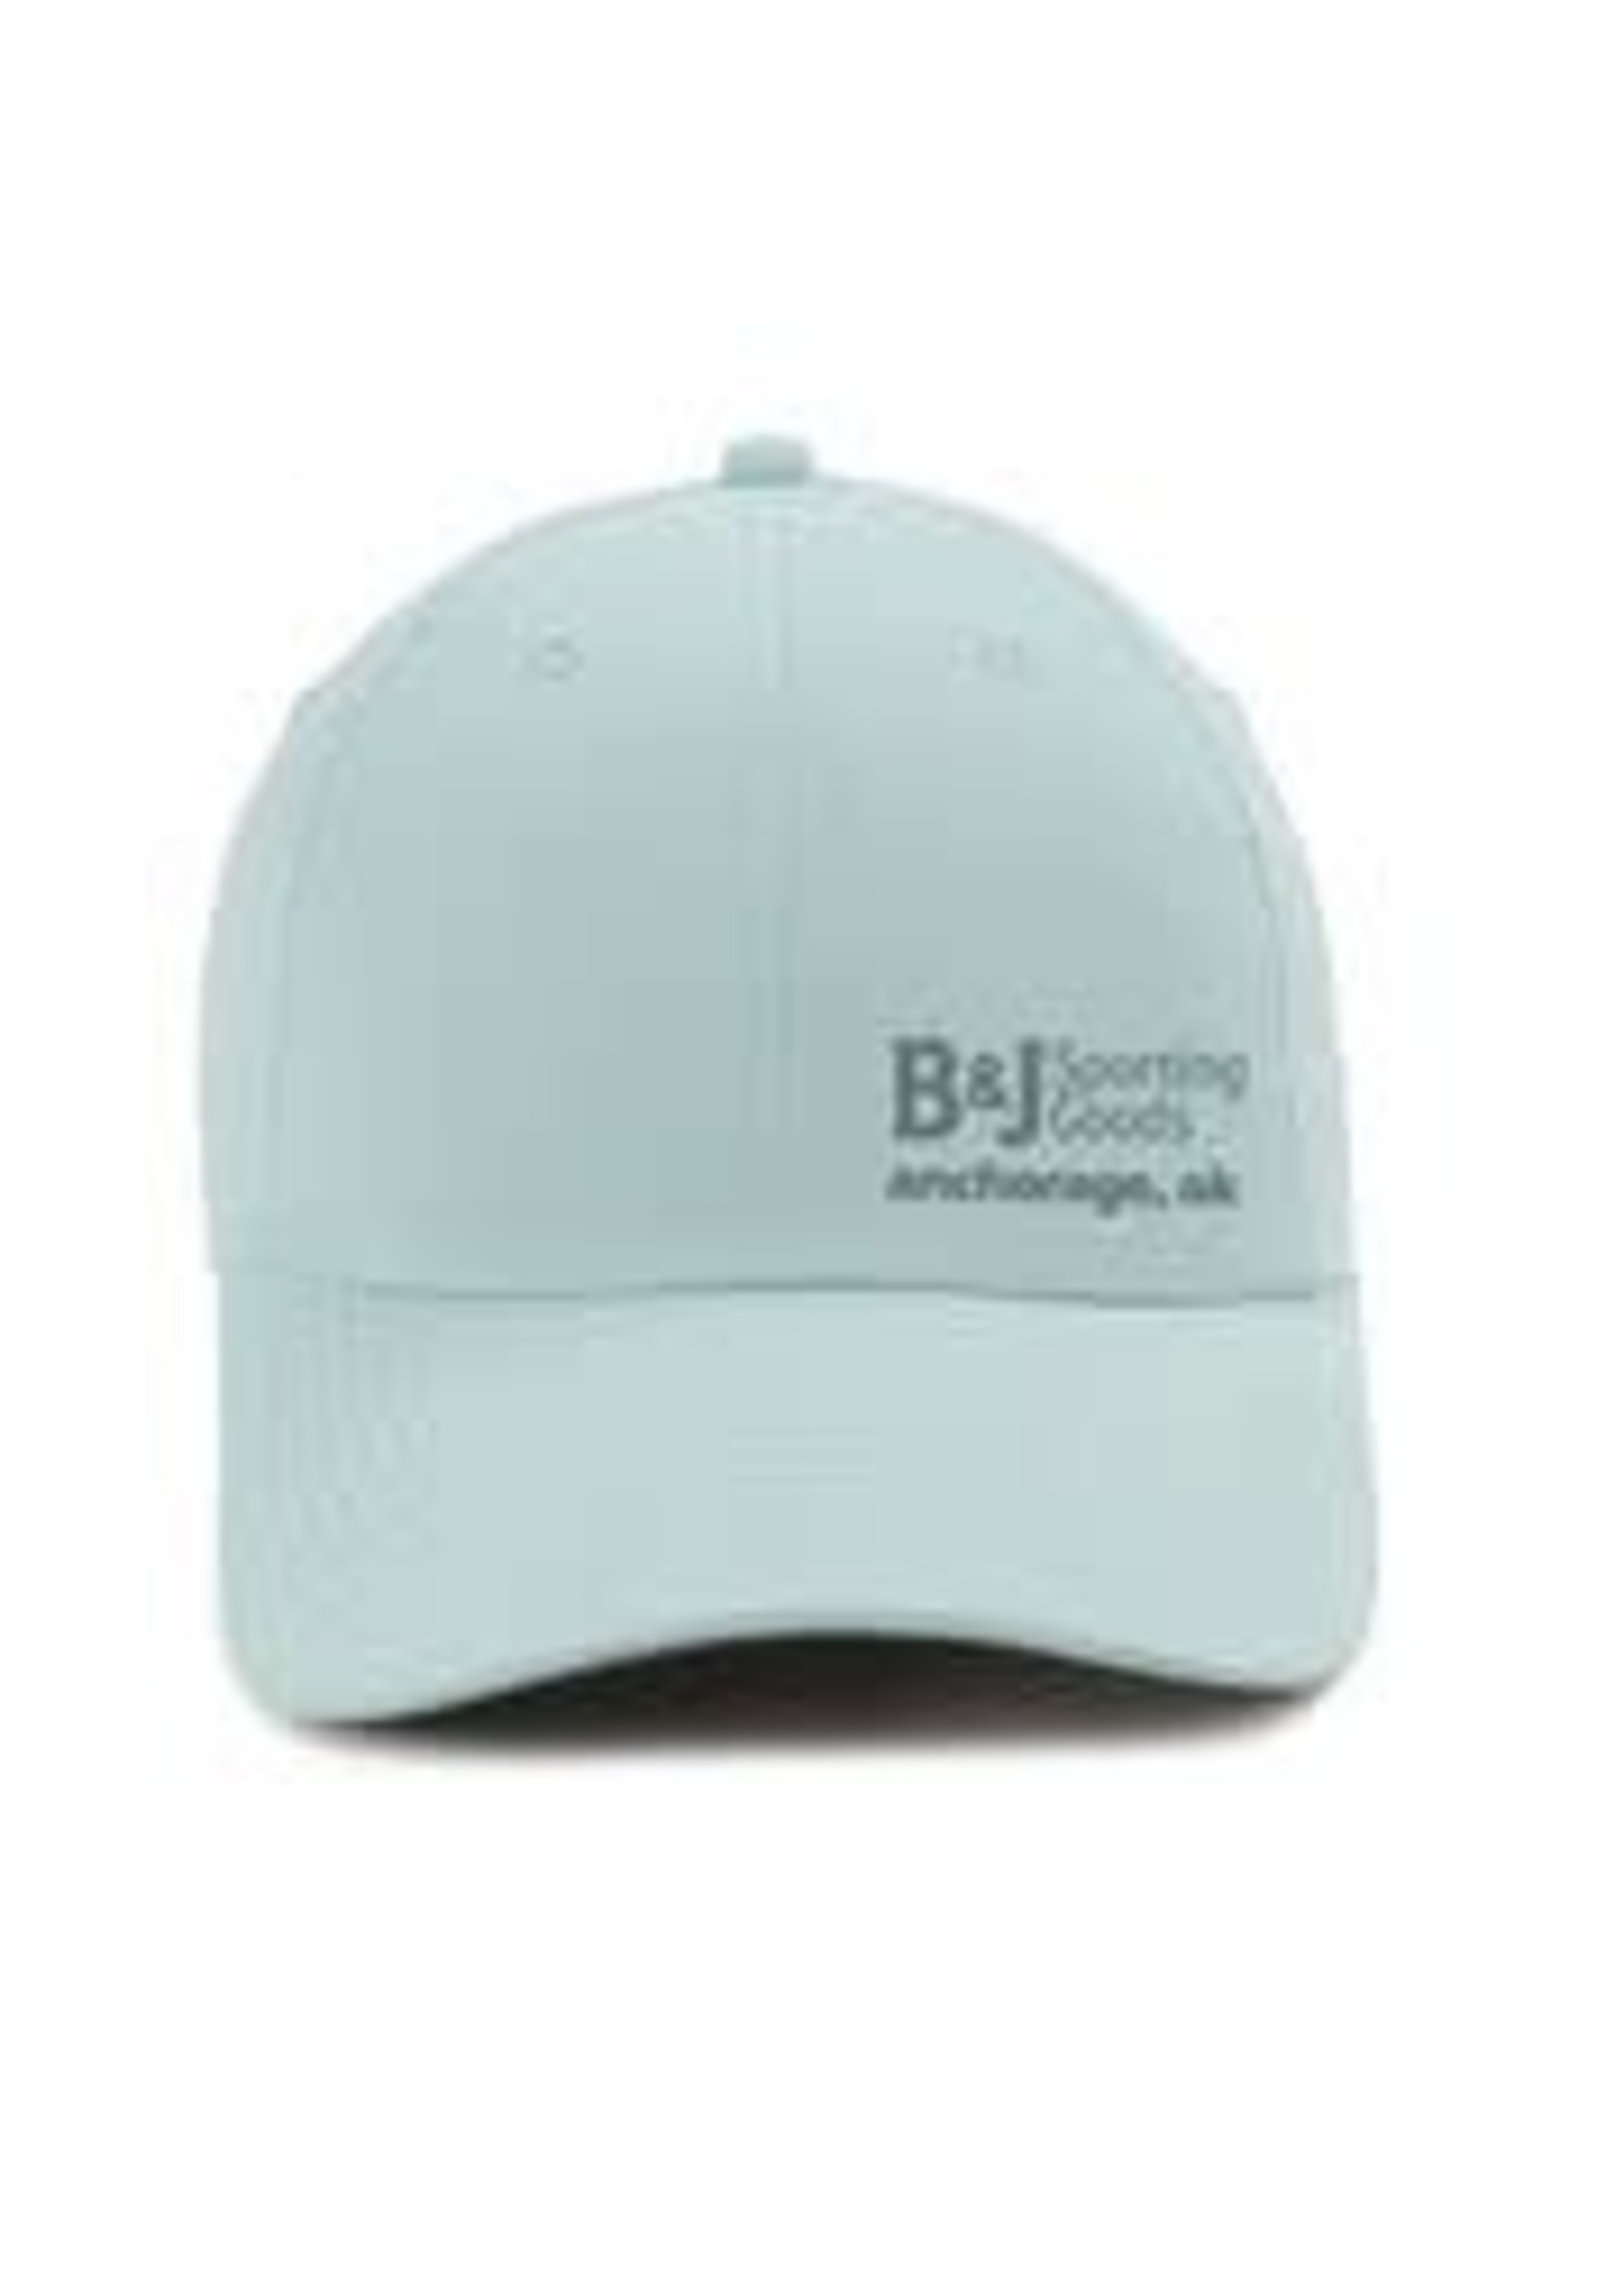 B&J Sporting Goods B&J Womens Performance Hat